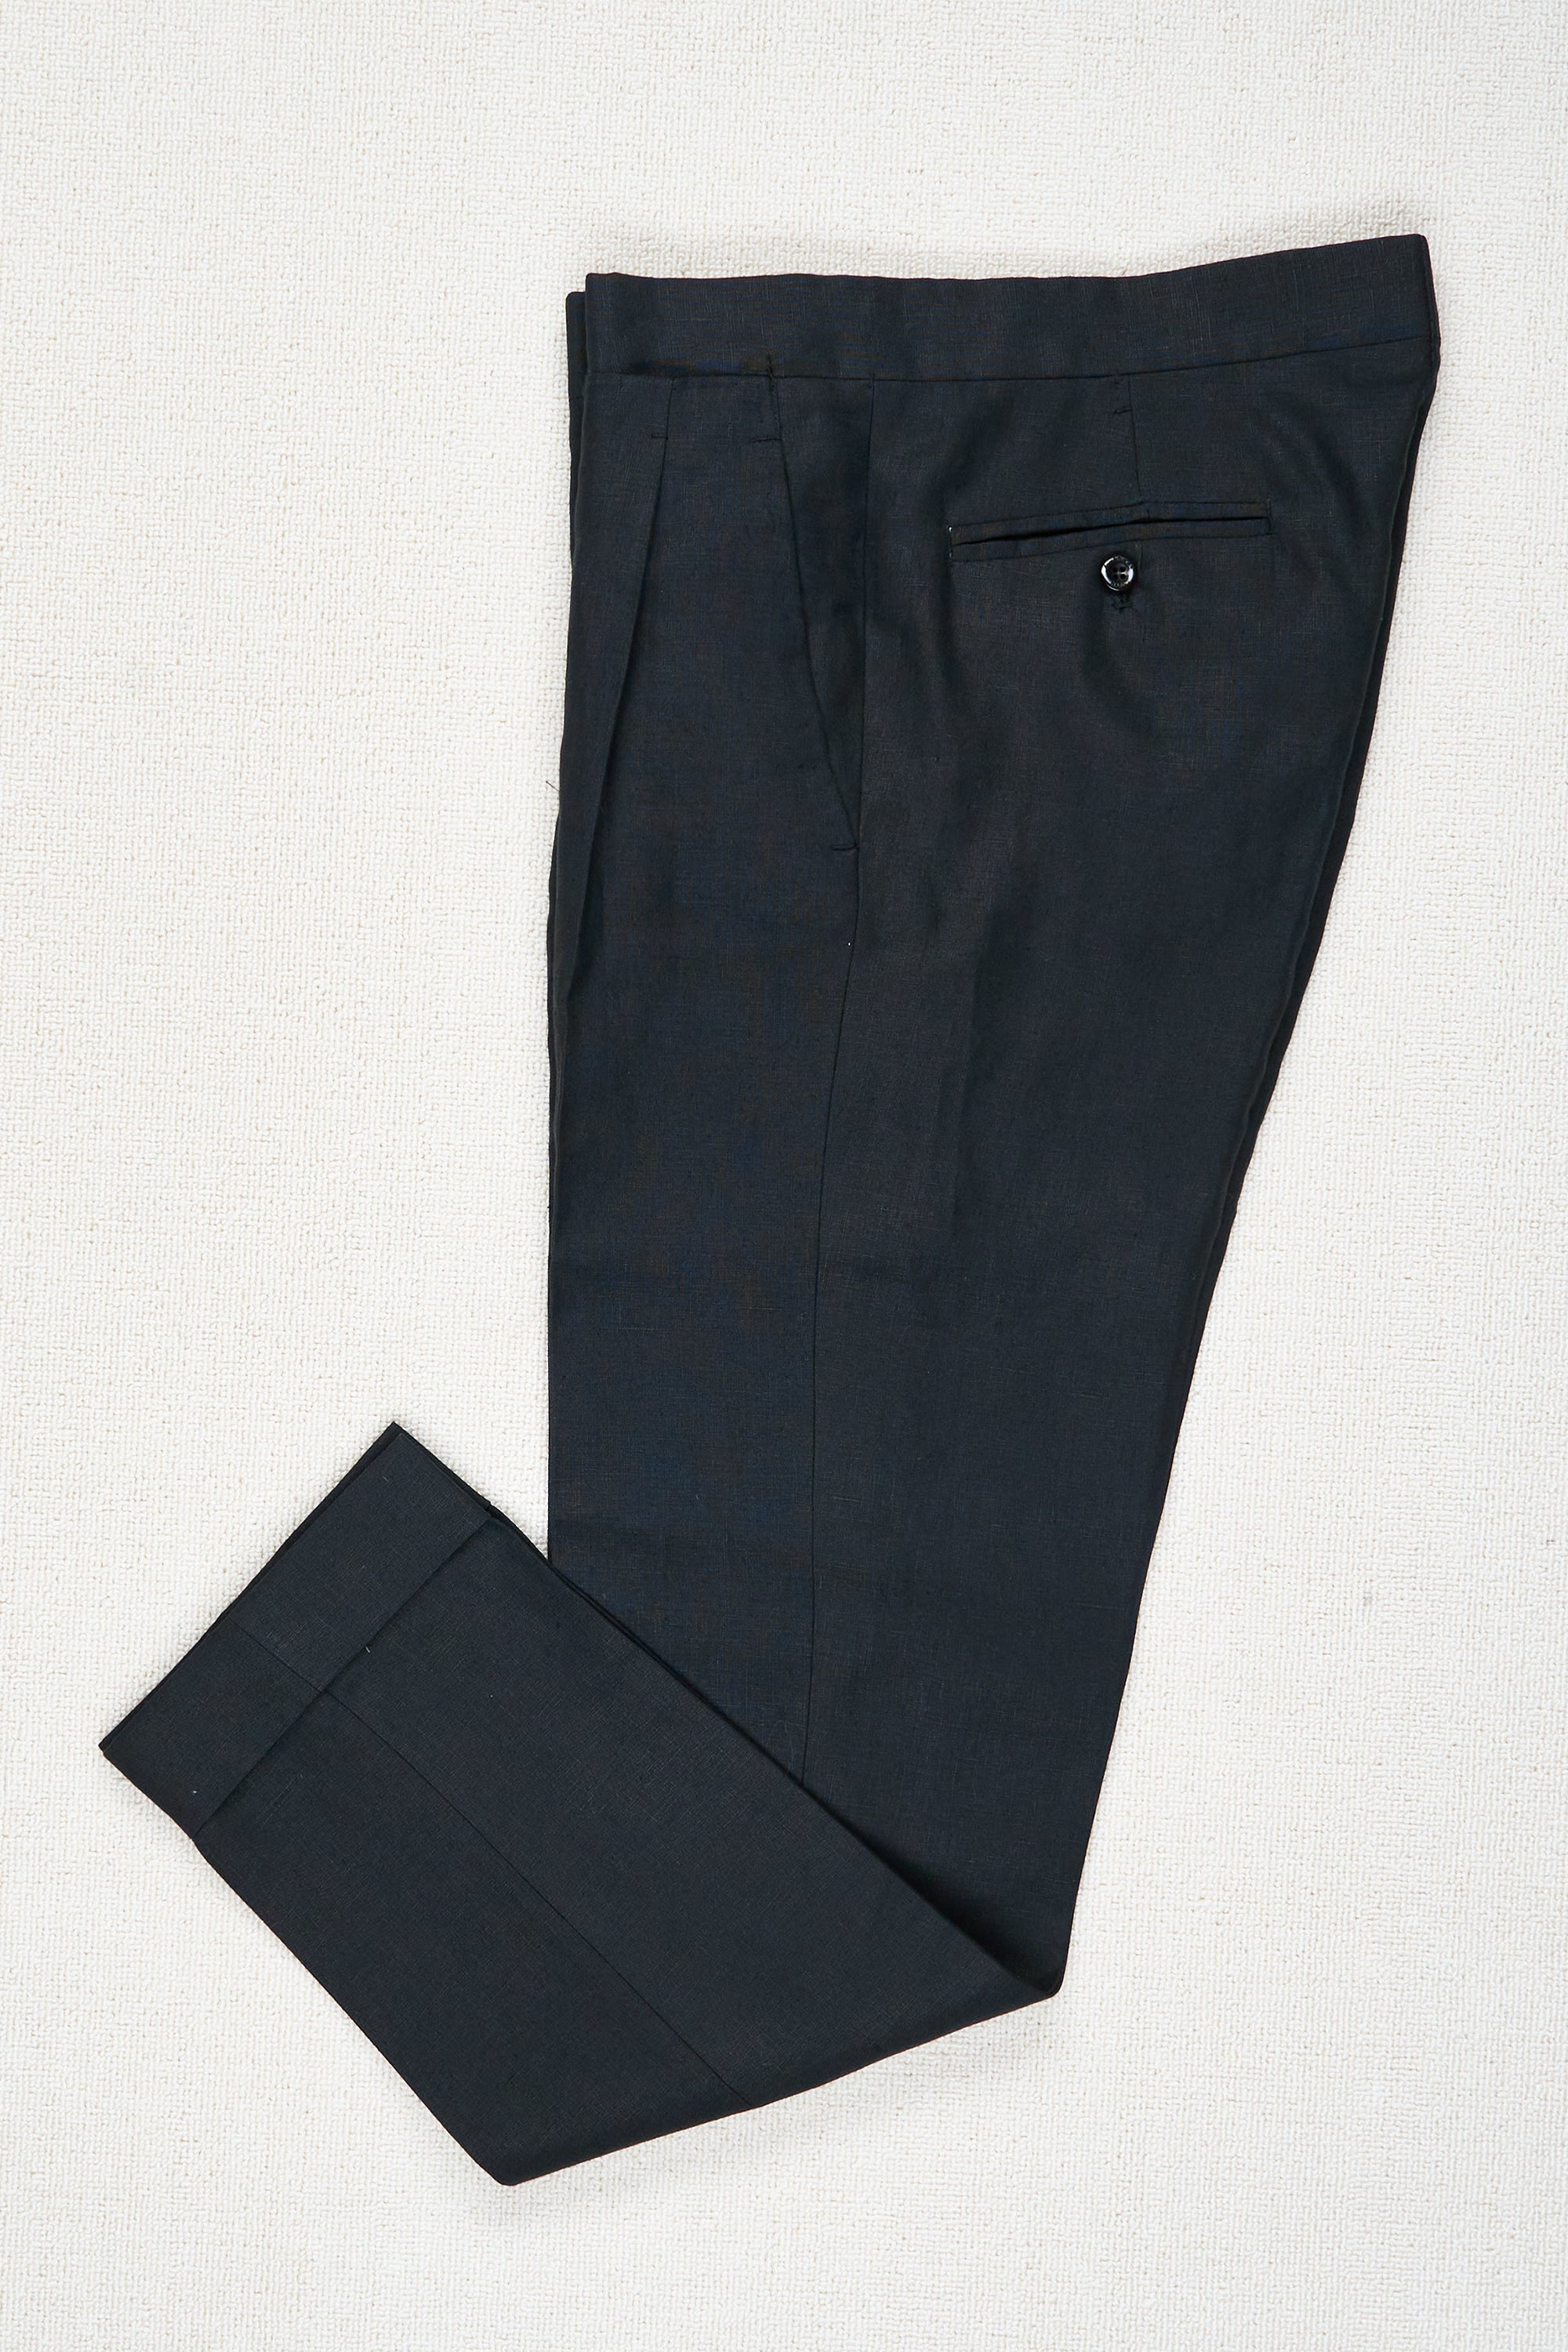 Ambrosi Napoli Black Linen Single-Pleat Trousers Bespoke